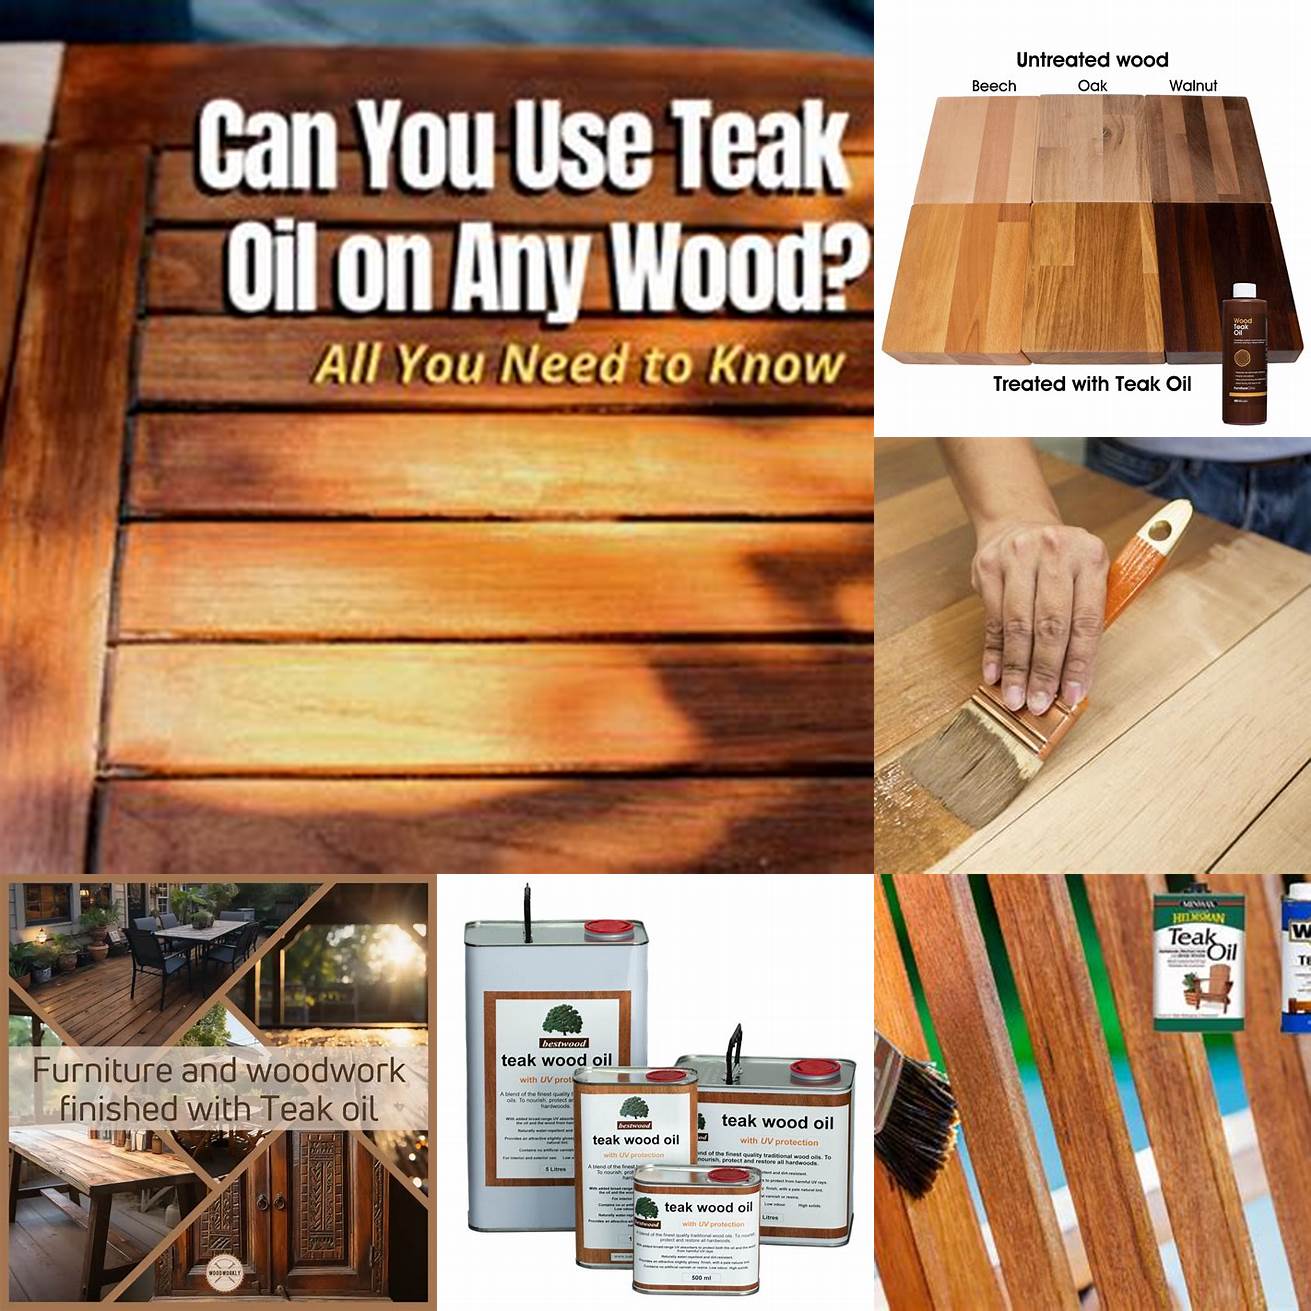 The benefits of using teak oil on oak furniture